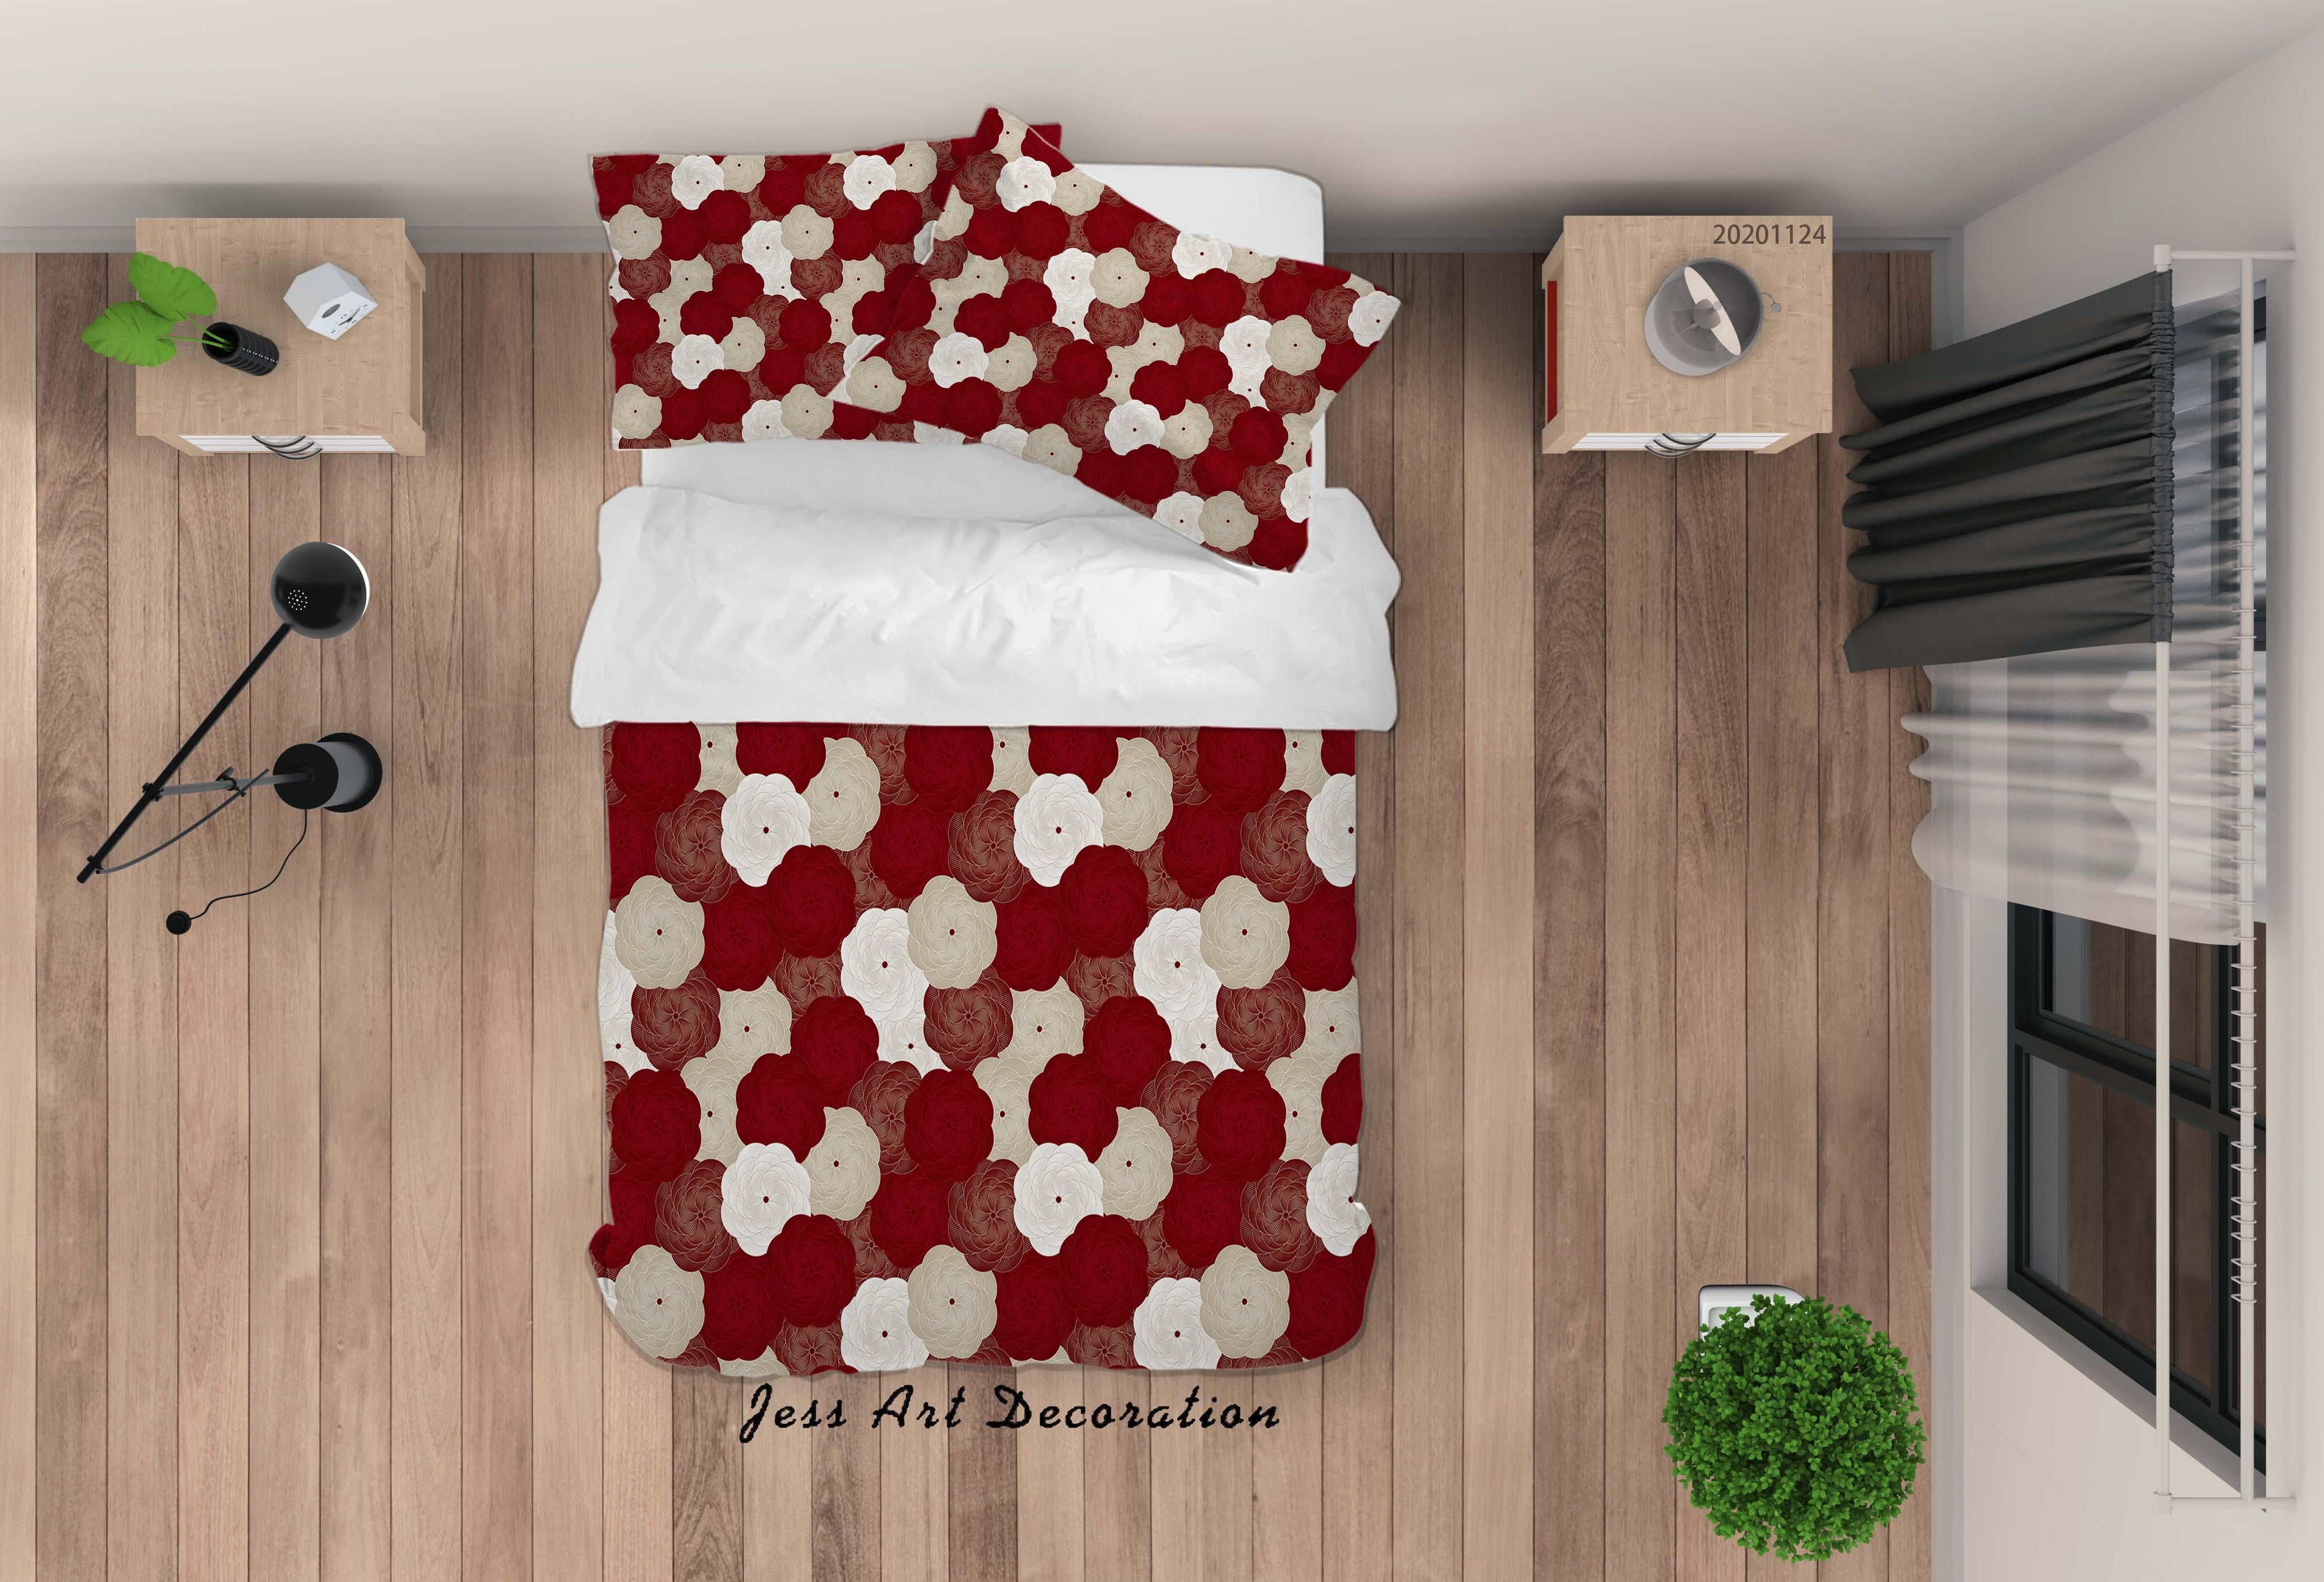 3D Vintage Hand Drawn Red White Floral Pattern Quilt Cover Set Bedding Set Duvet Cover Pillowcases LXL- Jess Art Decoration